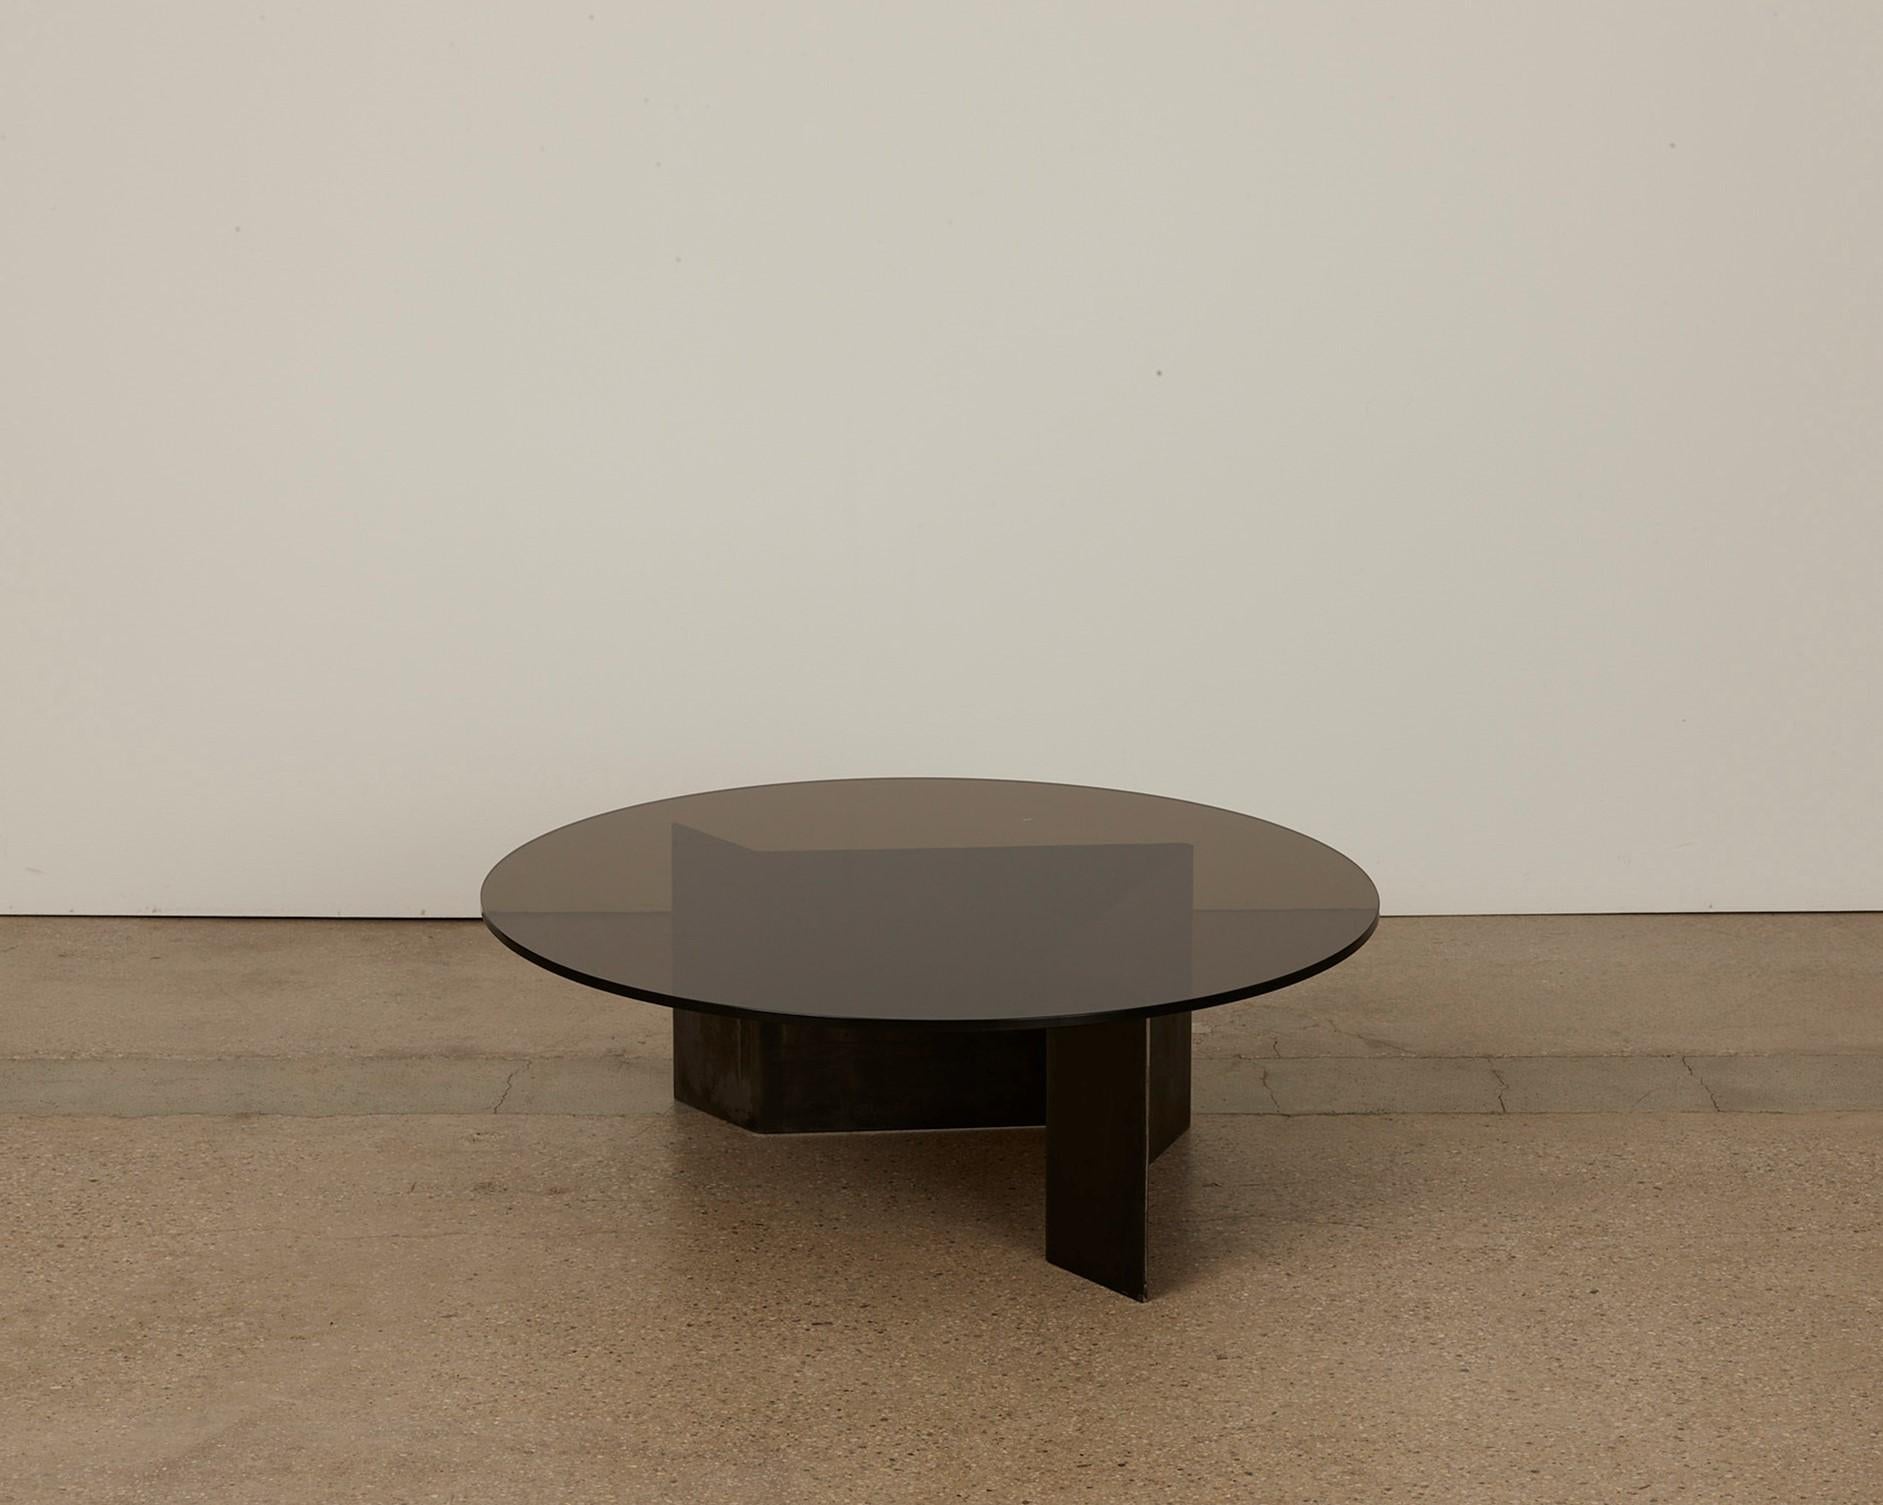 Pica Piccola Table by Umberto Bellardi Ricci
Dimensions: D 36